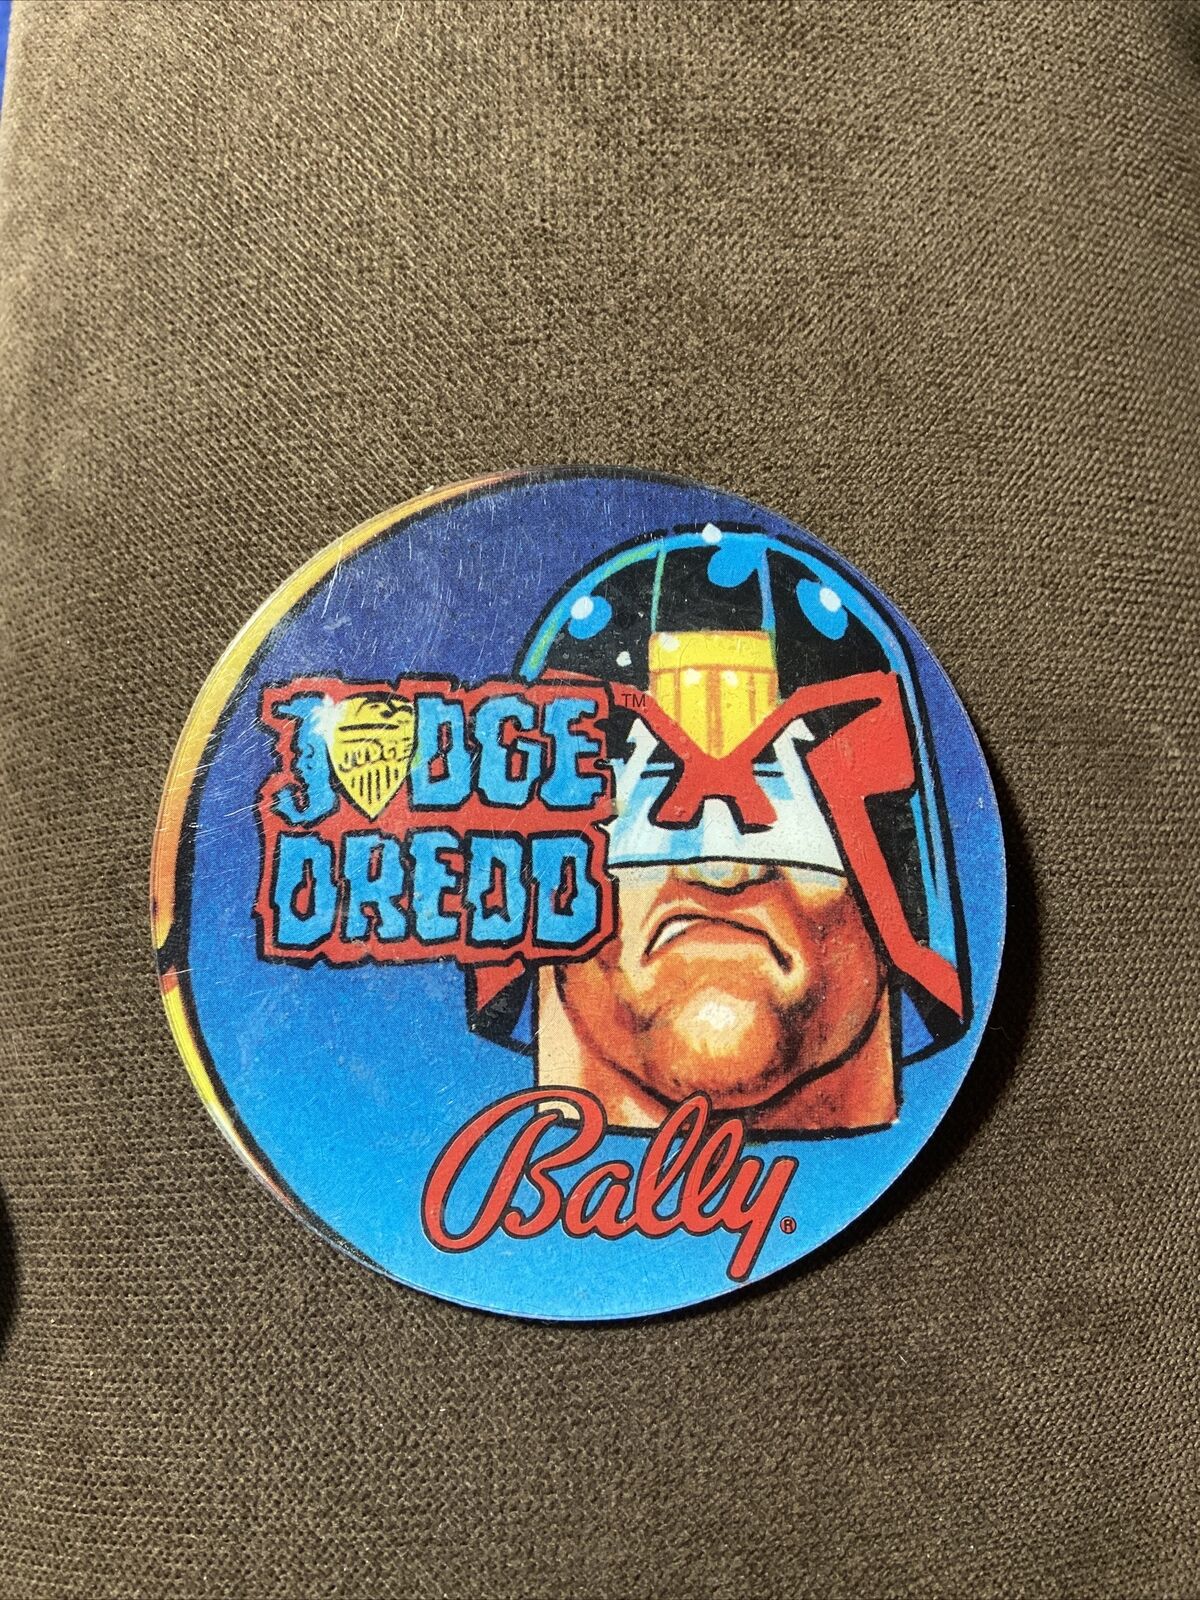 Bally Judge Dredd Pinball Promo Plastic Original Promo Shield Coaster 1993